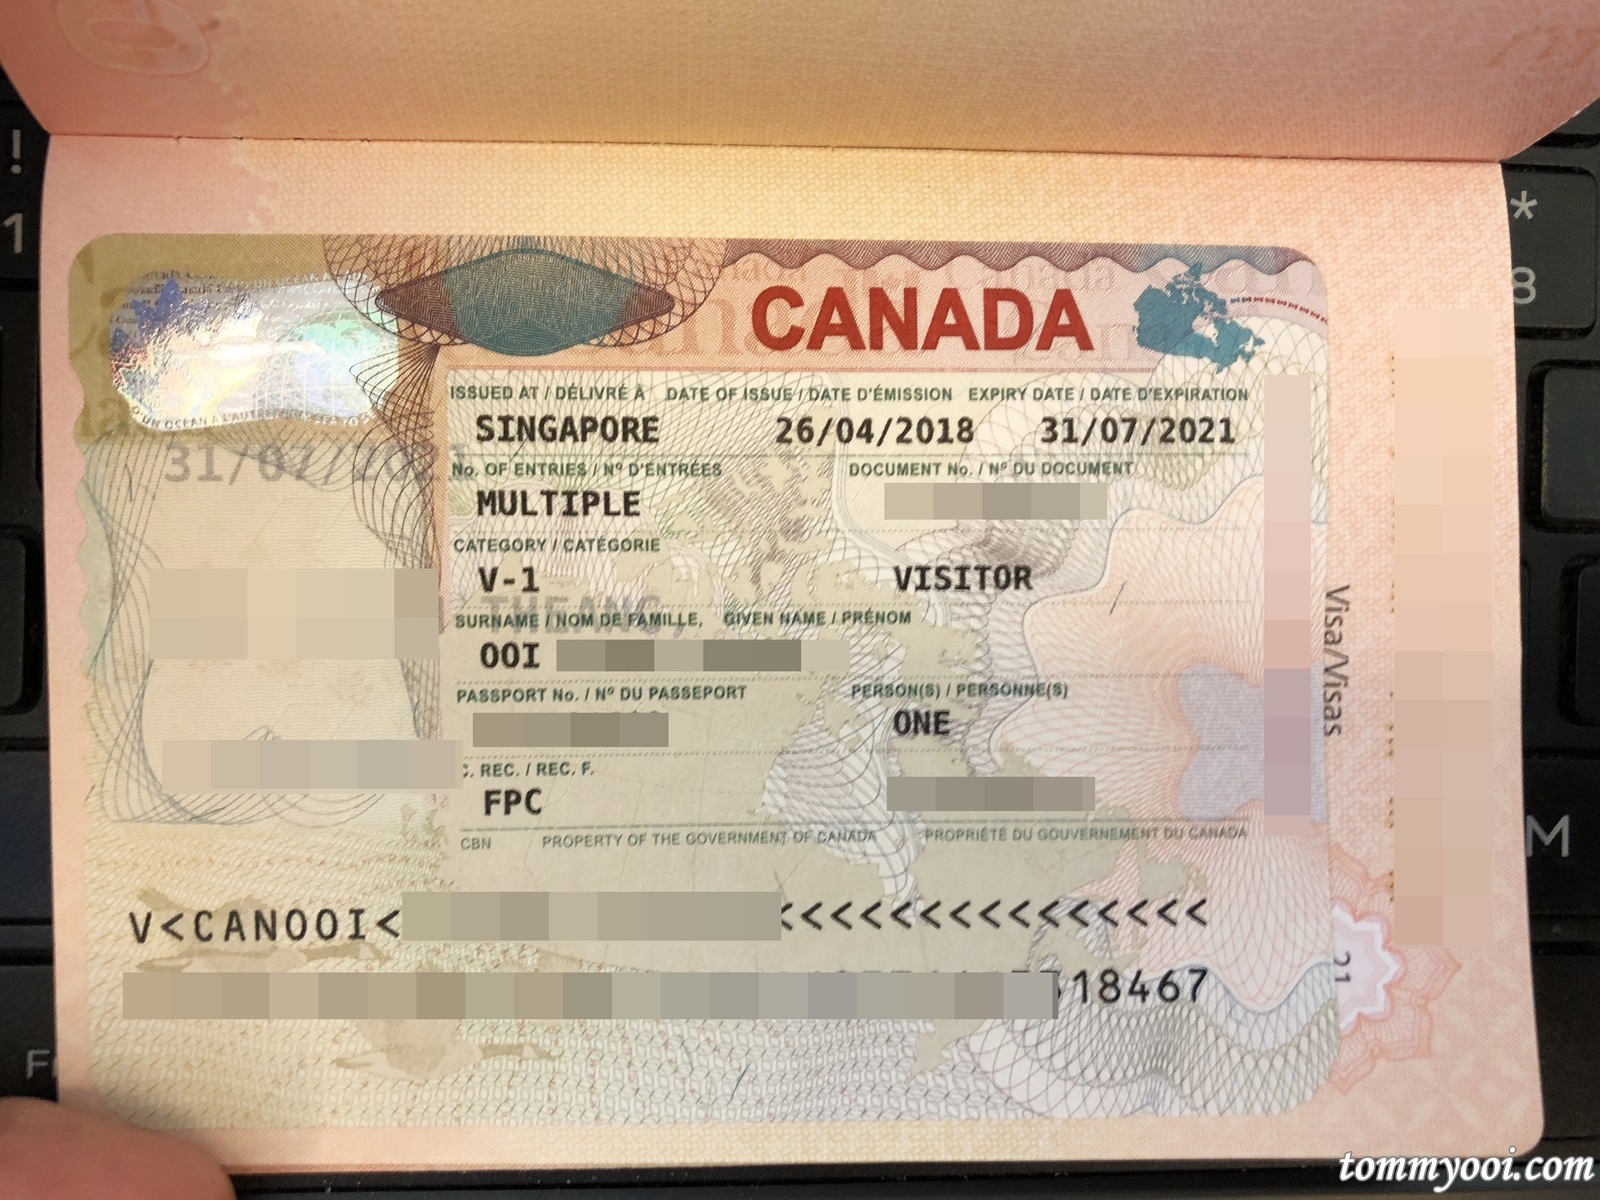 how does canada tourist visa look like